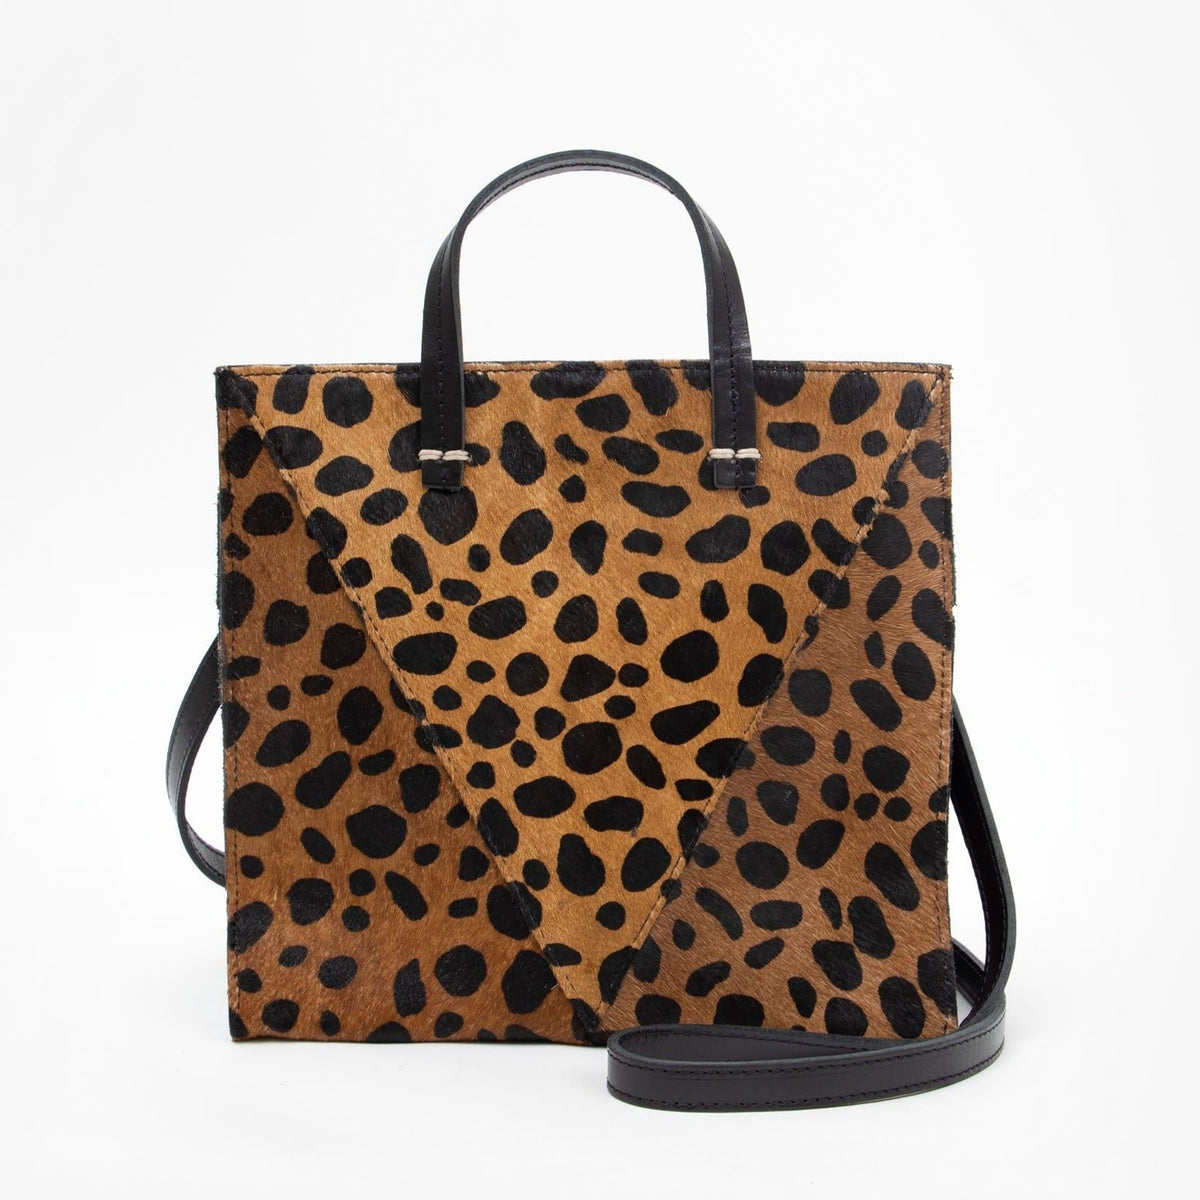 Clare V. Women's Simple V Tote Bag - Leopard